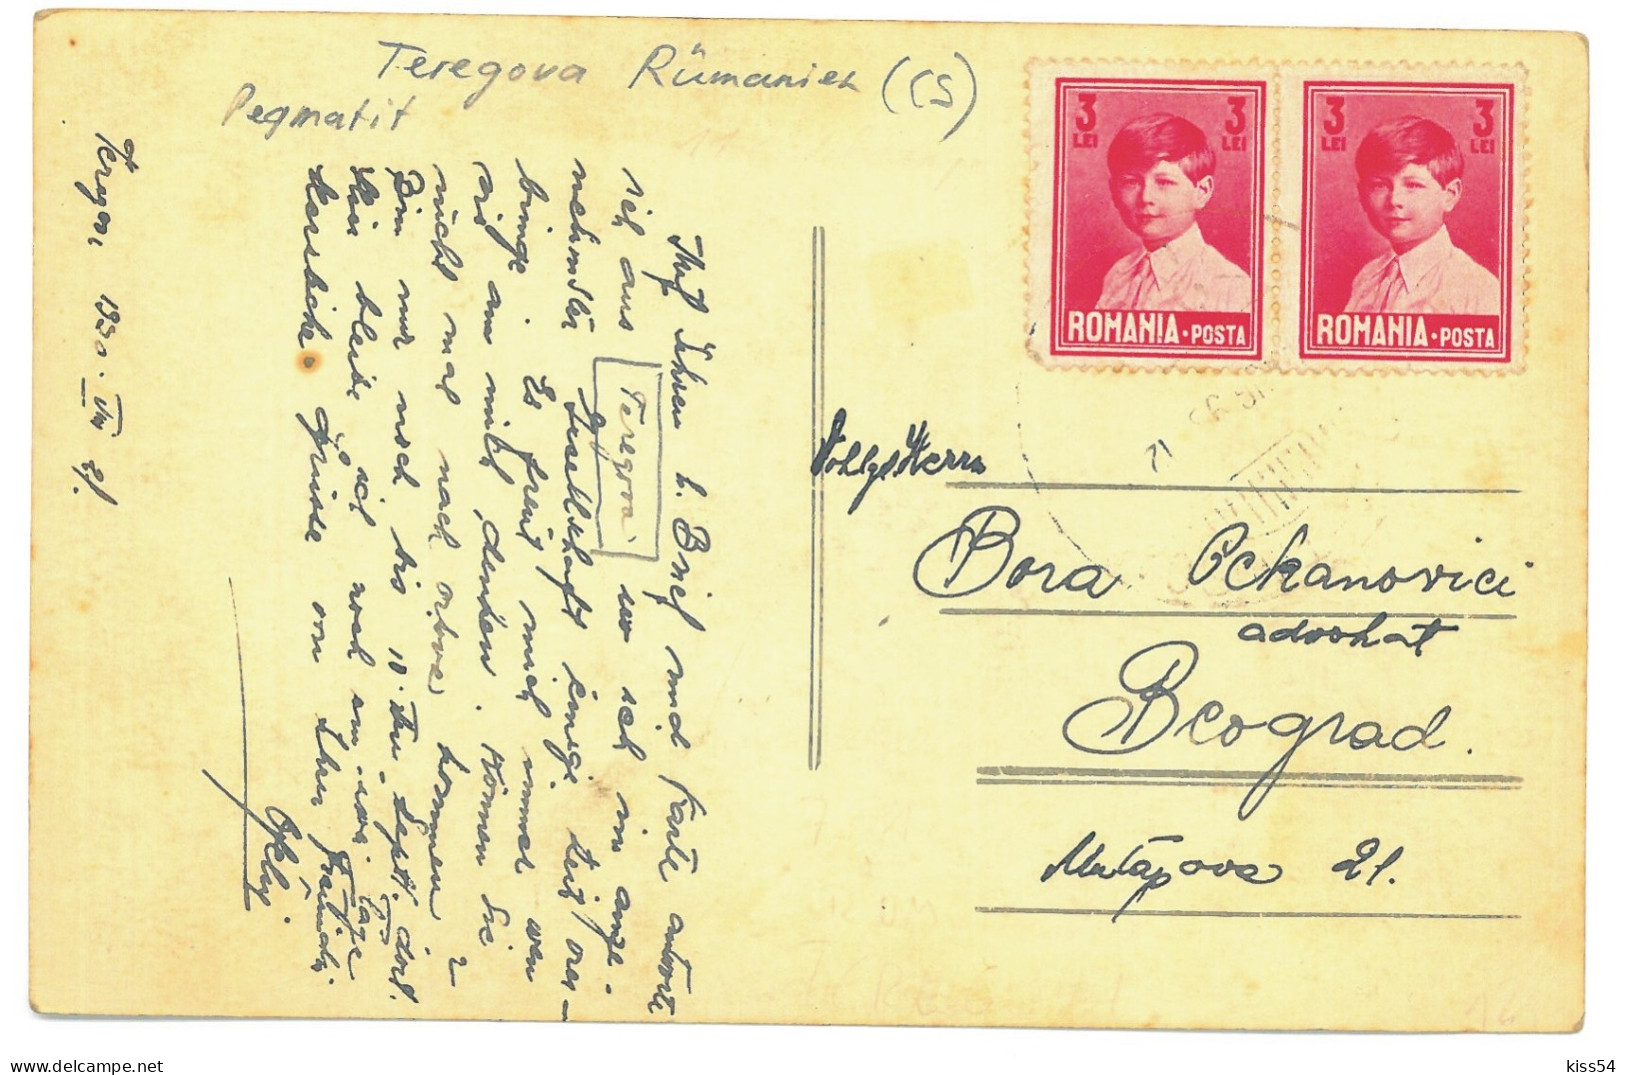 RO 38 - 25019 TEREGOVA, Caras-Severin, Mine Feldspat, Romania - Old Postcard, Real Photo - Used - 1930 - Roumanie